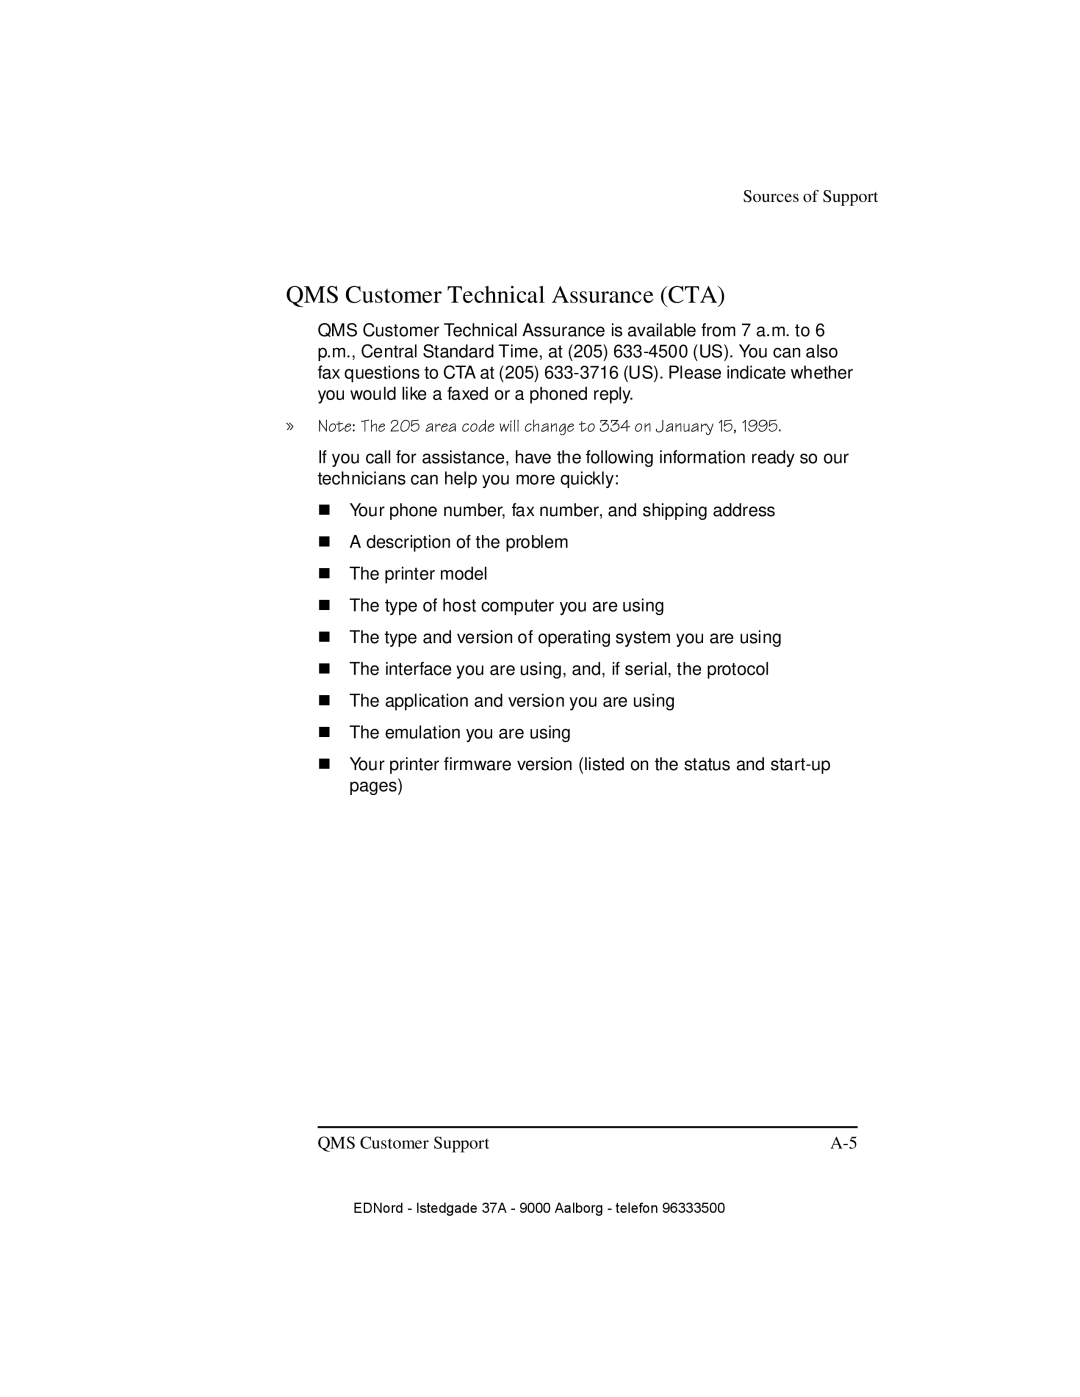 IBM QMS 4525 manual QMS Customer Technical Assurance CTA 